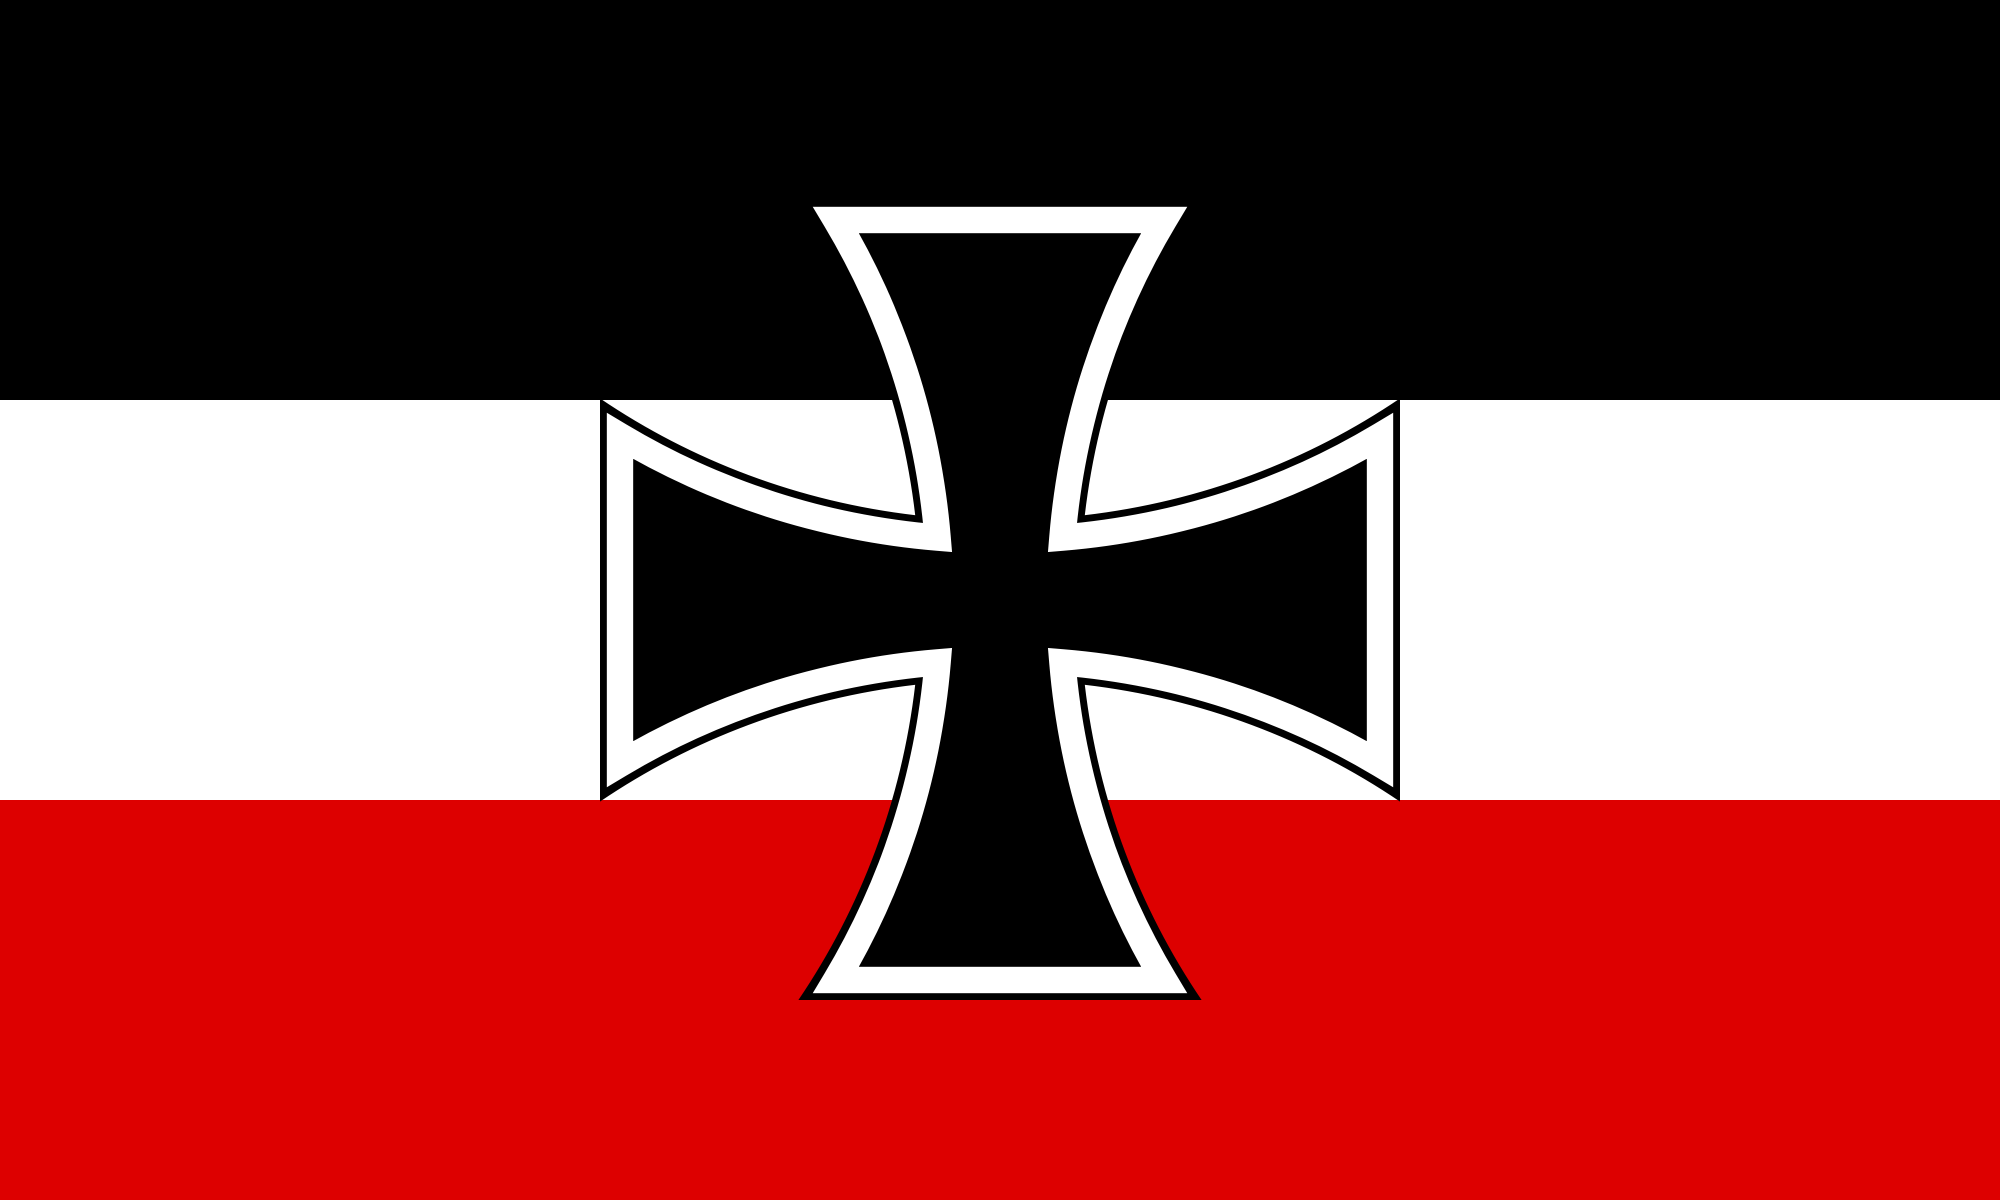 Weimar Republic - Wikipedia, the free encyclopedia